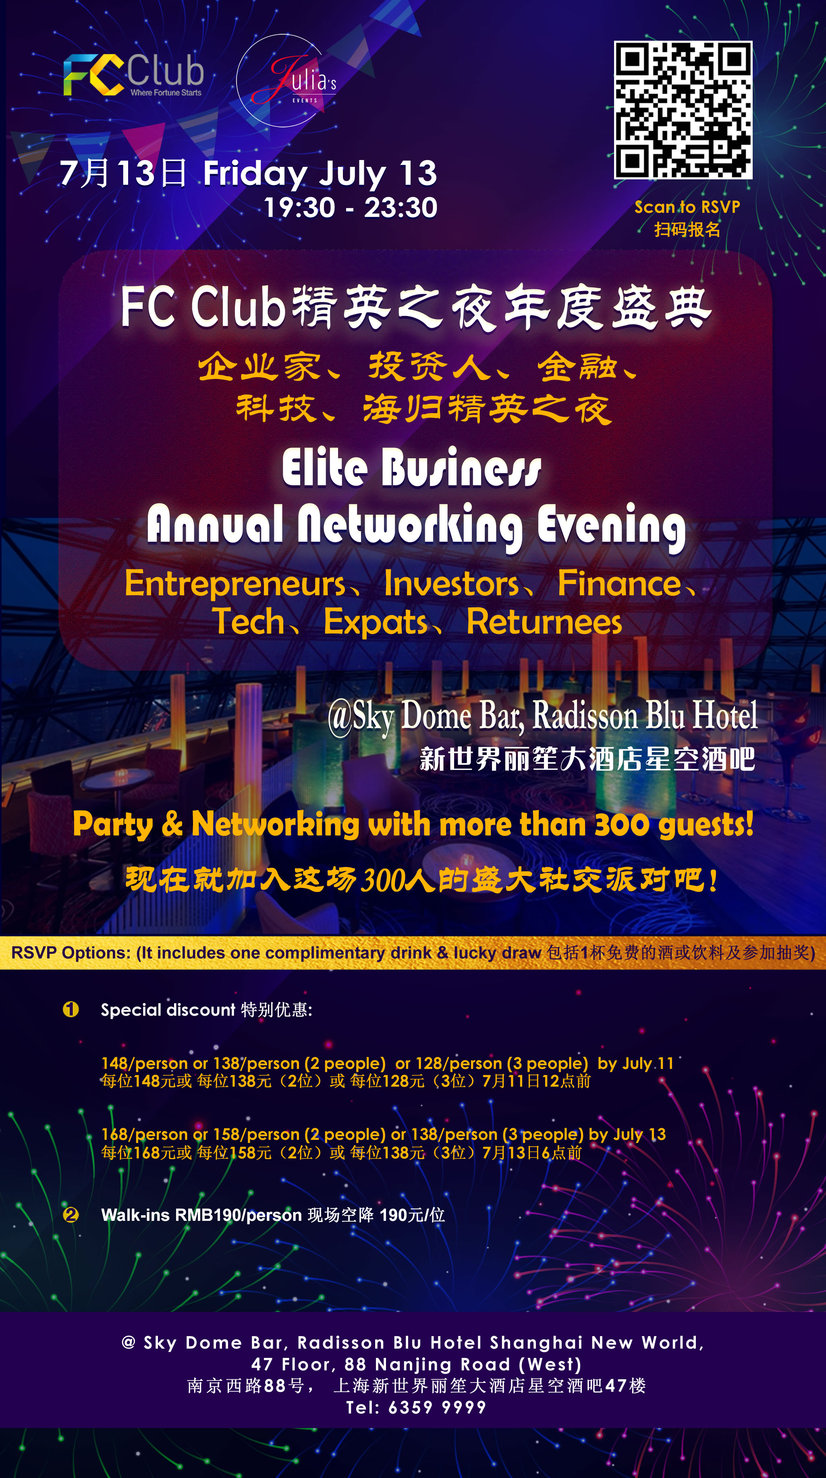 Fc Club Elite Business Annual Networking Evening Fc Club精英之夜年度盛典 企业家 投资人 金融 科技 海归之夜 Friday July 13 18 19 30 To 23 30 Sky